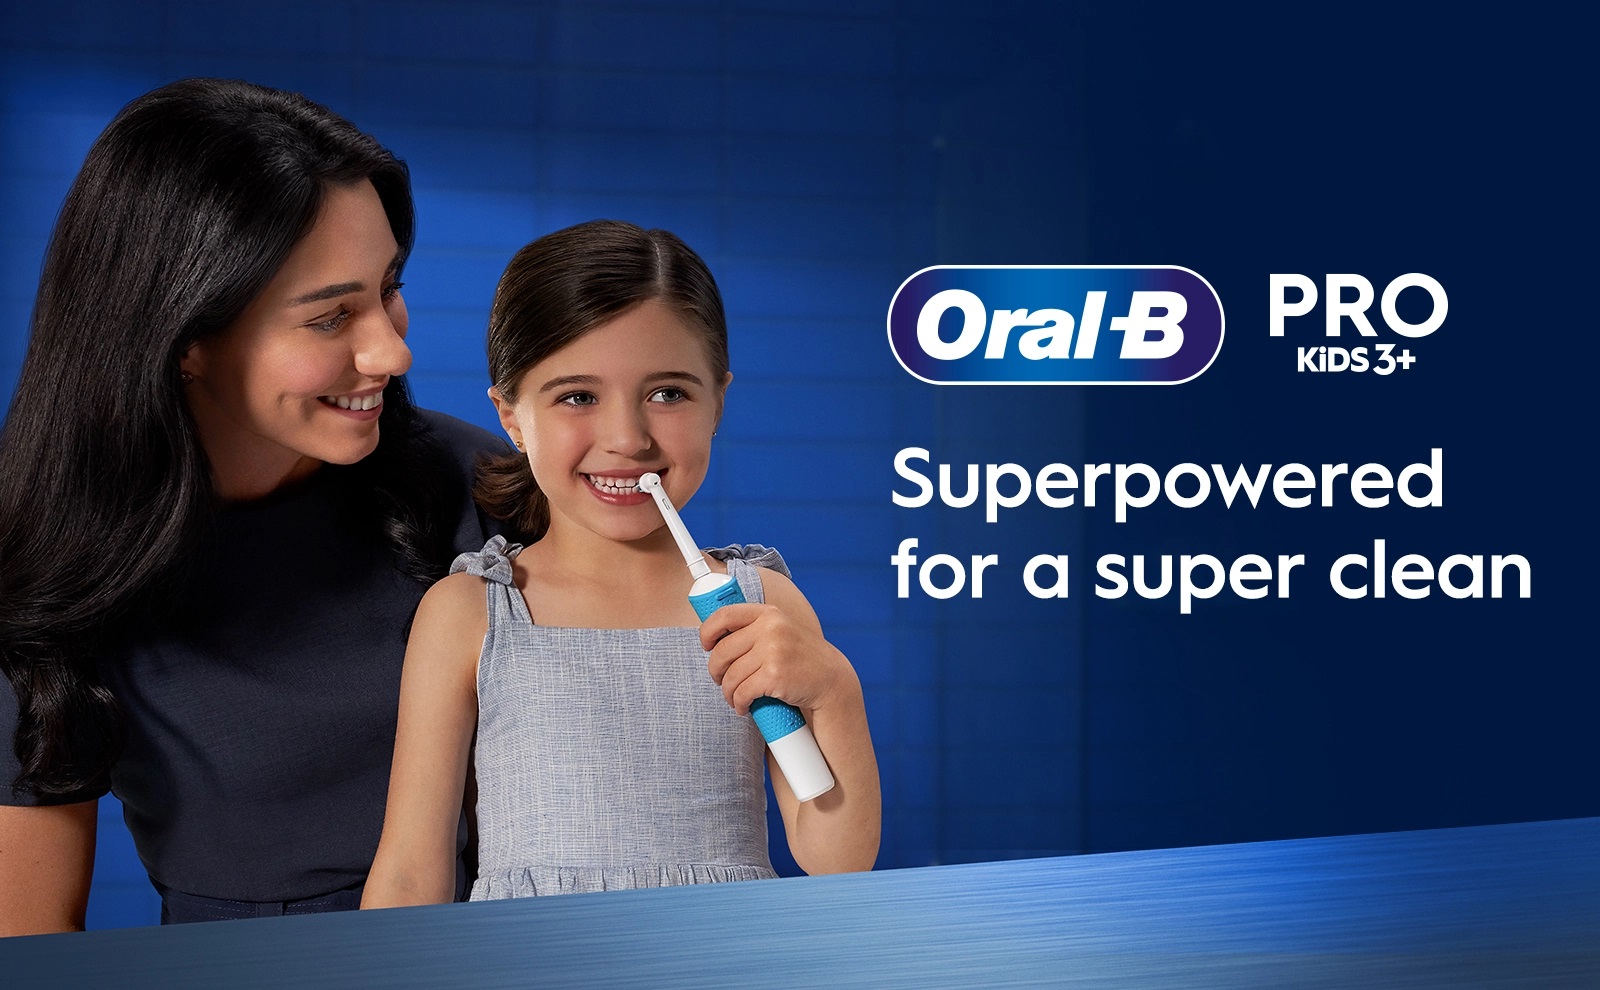 Oral B PRO KiDS3+ Superpowered for a super clean FROZEN Disney.